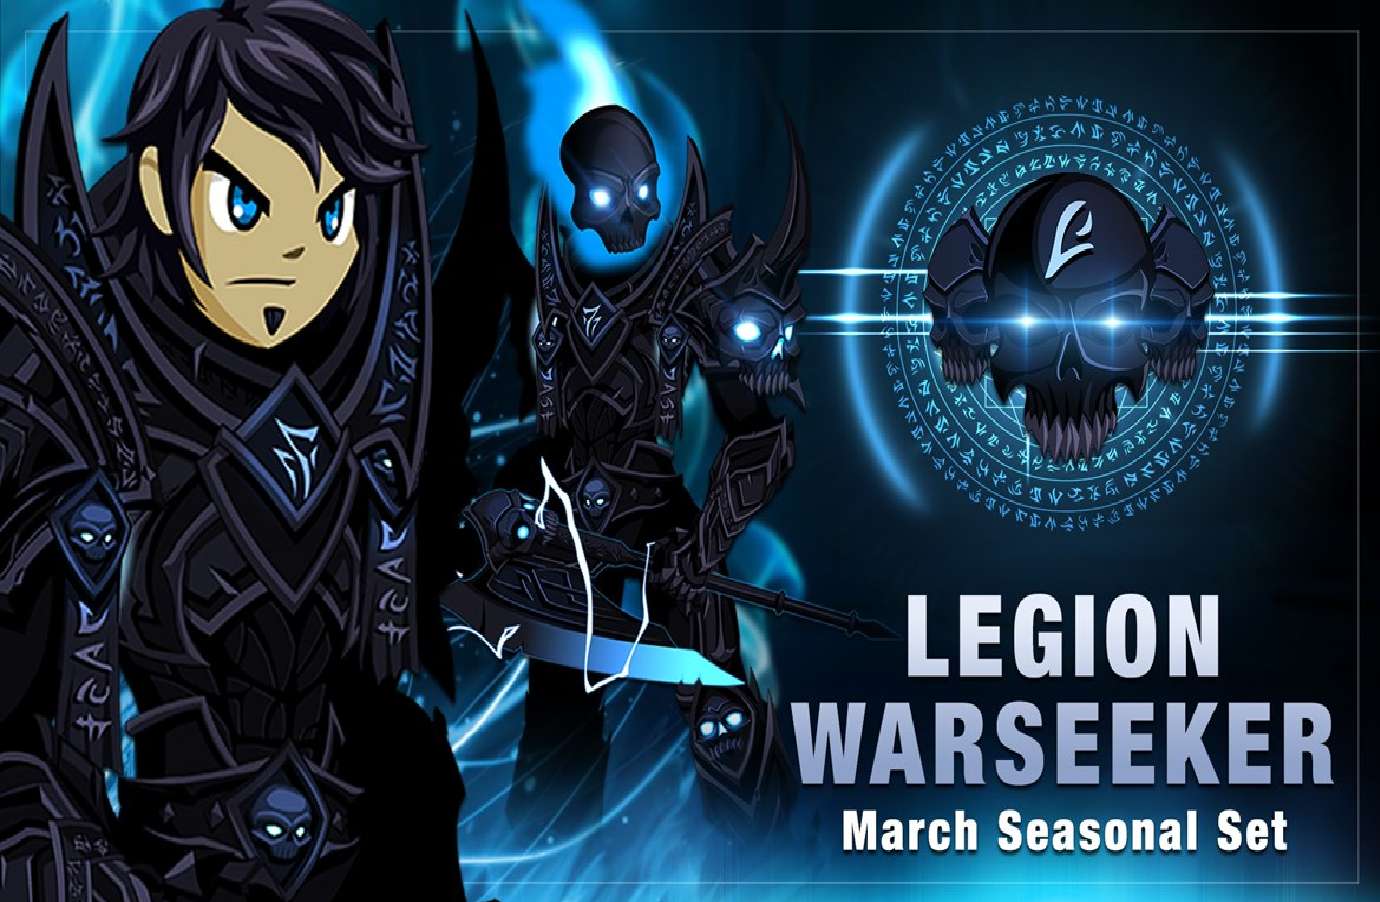 AdventureQuest Worlds Releases Their March Seasonal Set For 2020 The Legion Warseeker